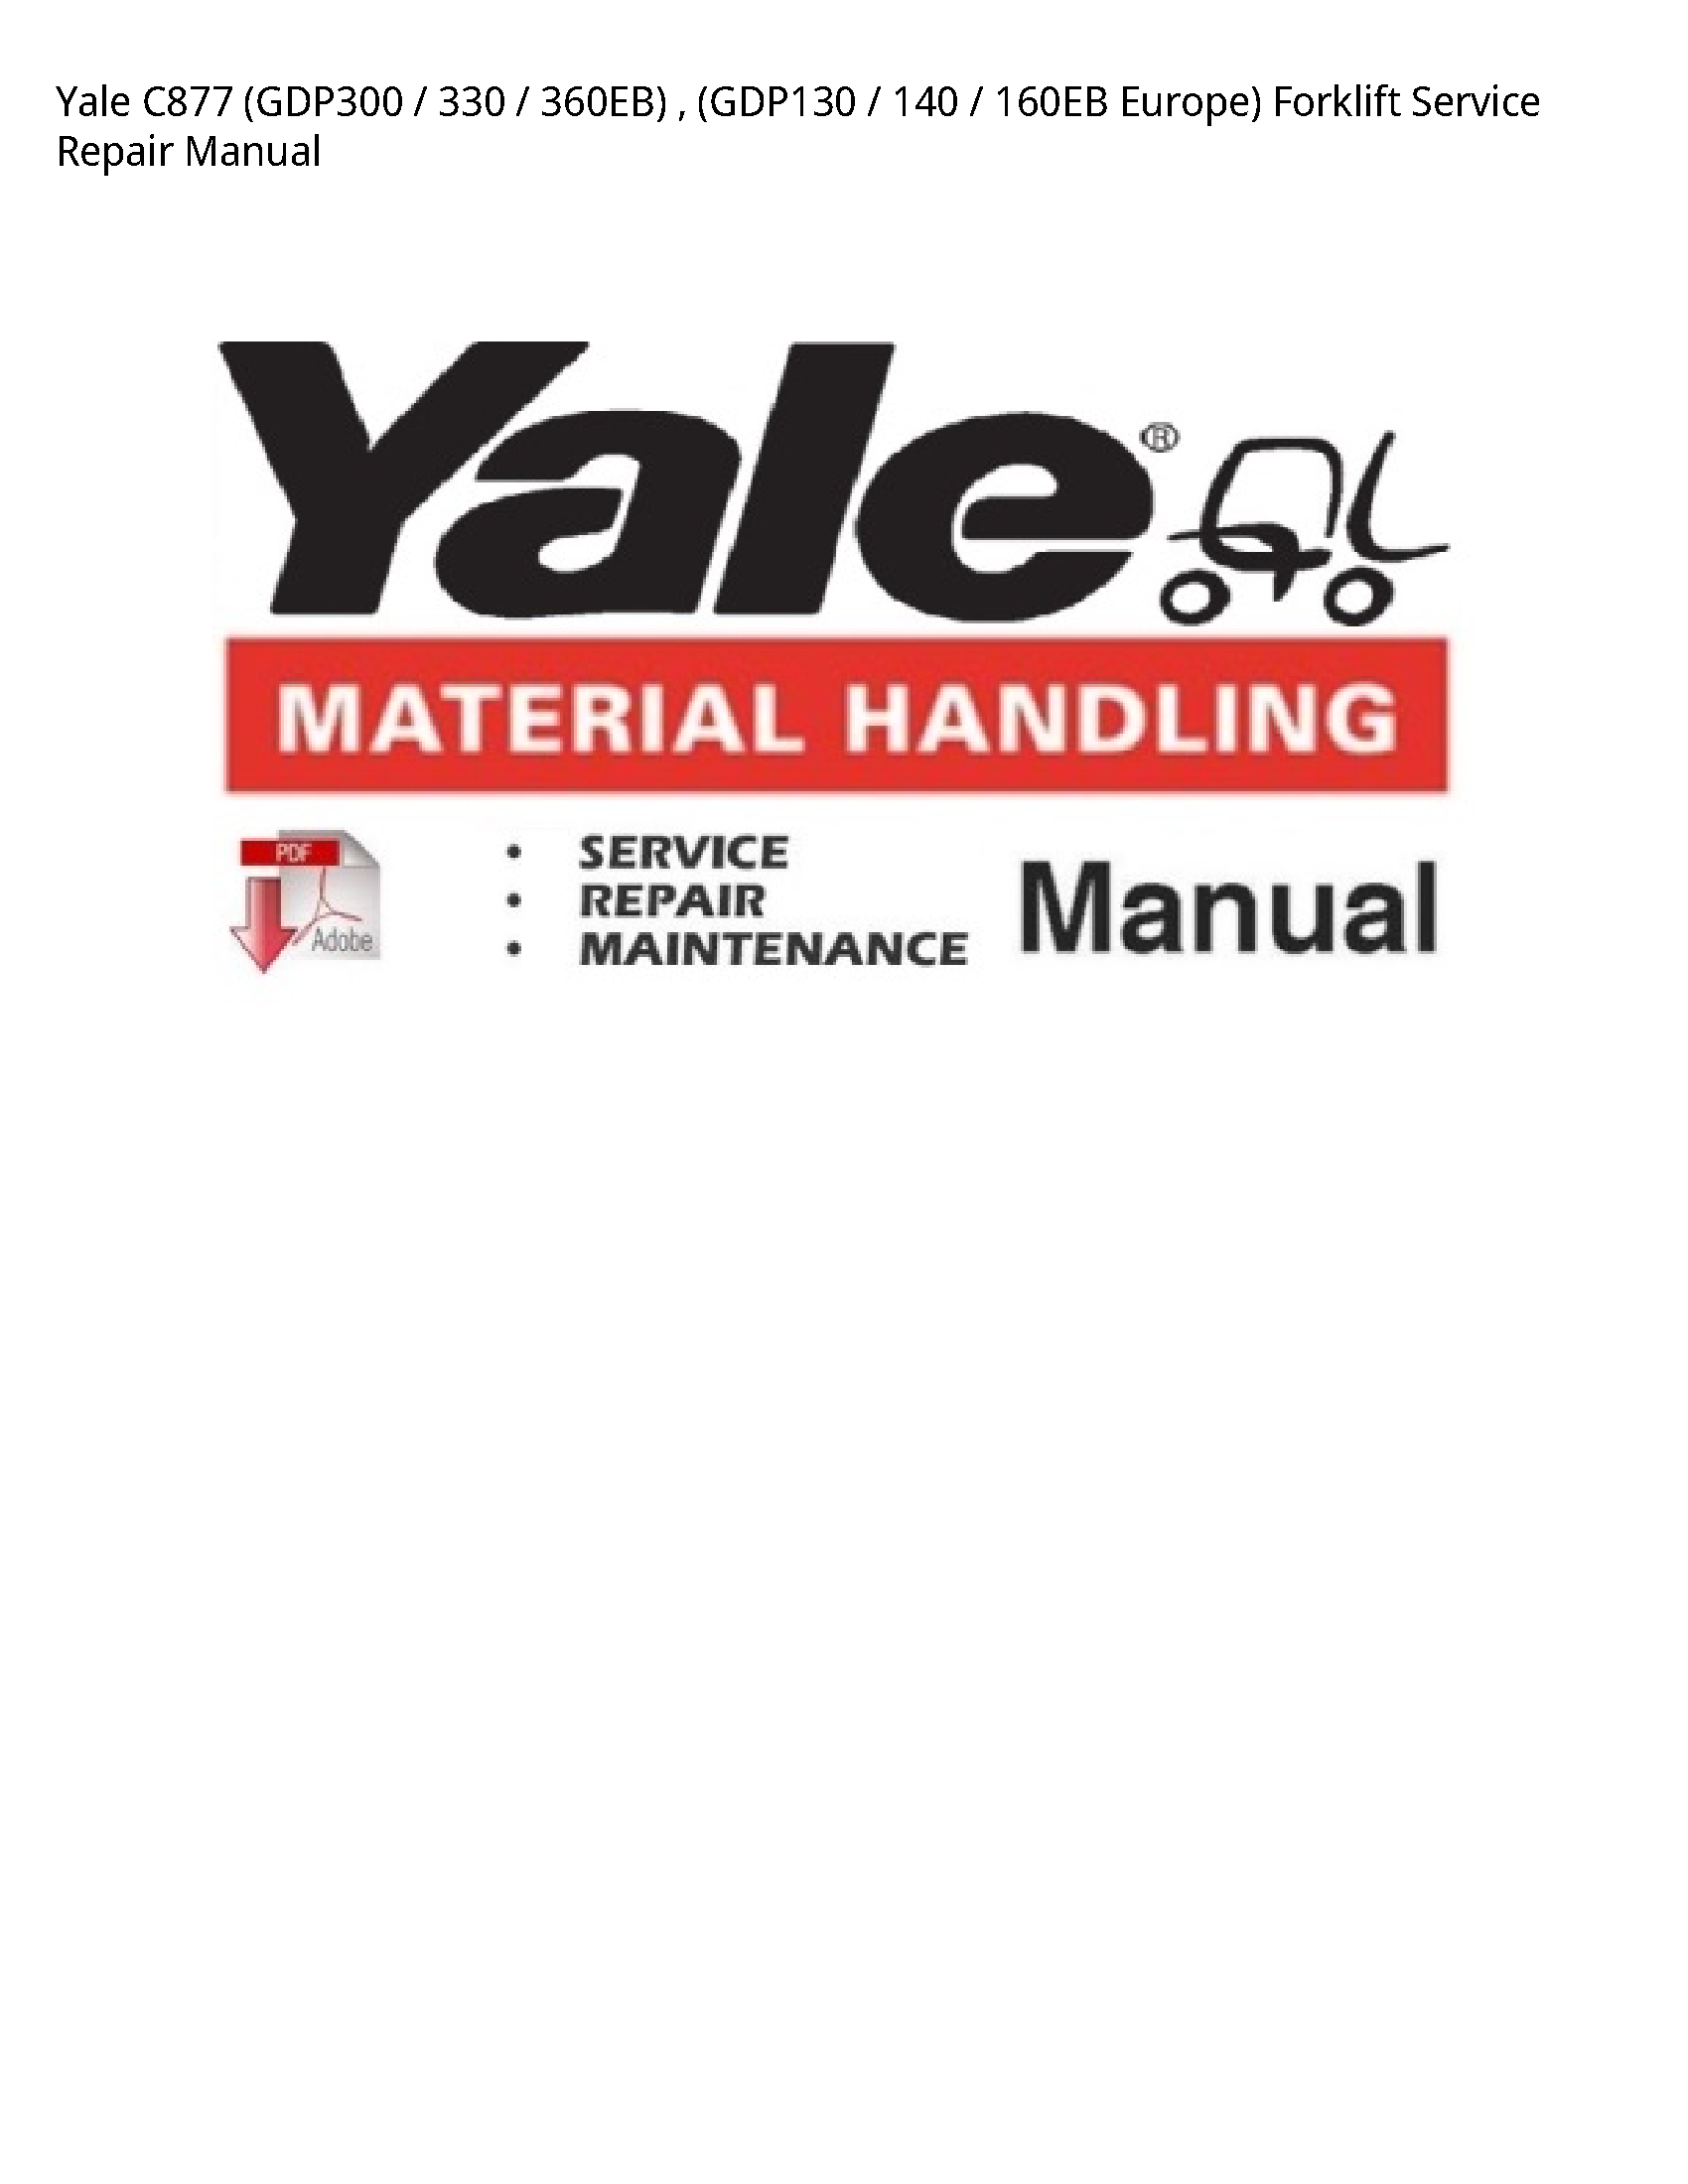 Yale C877 Europe) Forklift manual